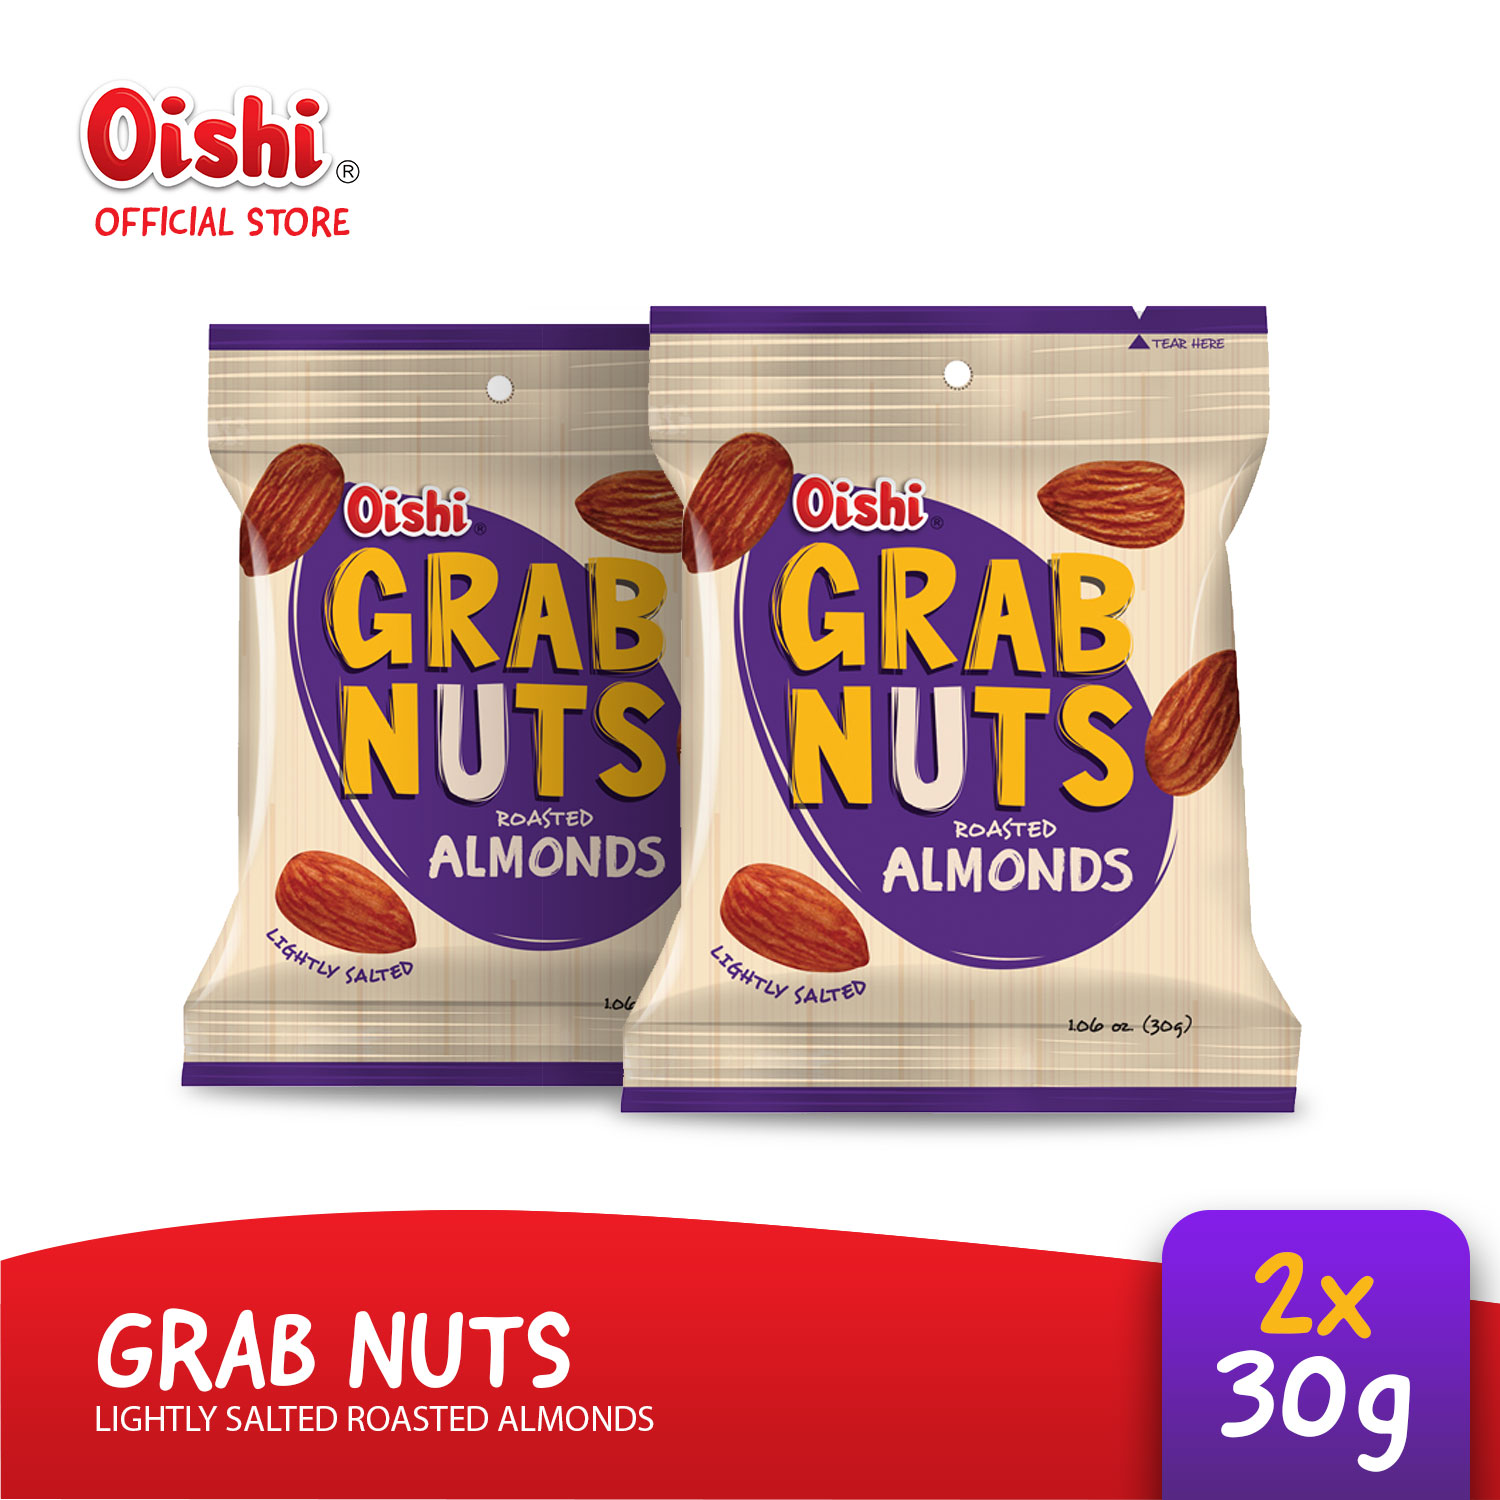 Oishi Grab Nuts Roasted Almond 30g x 2